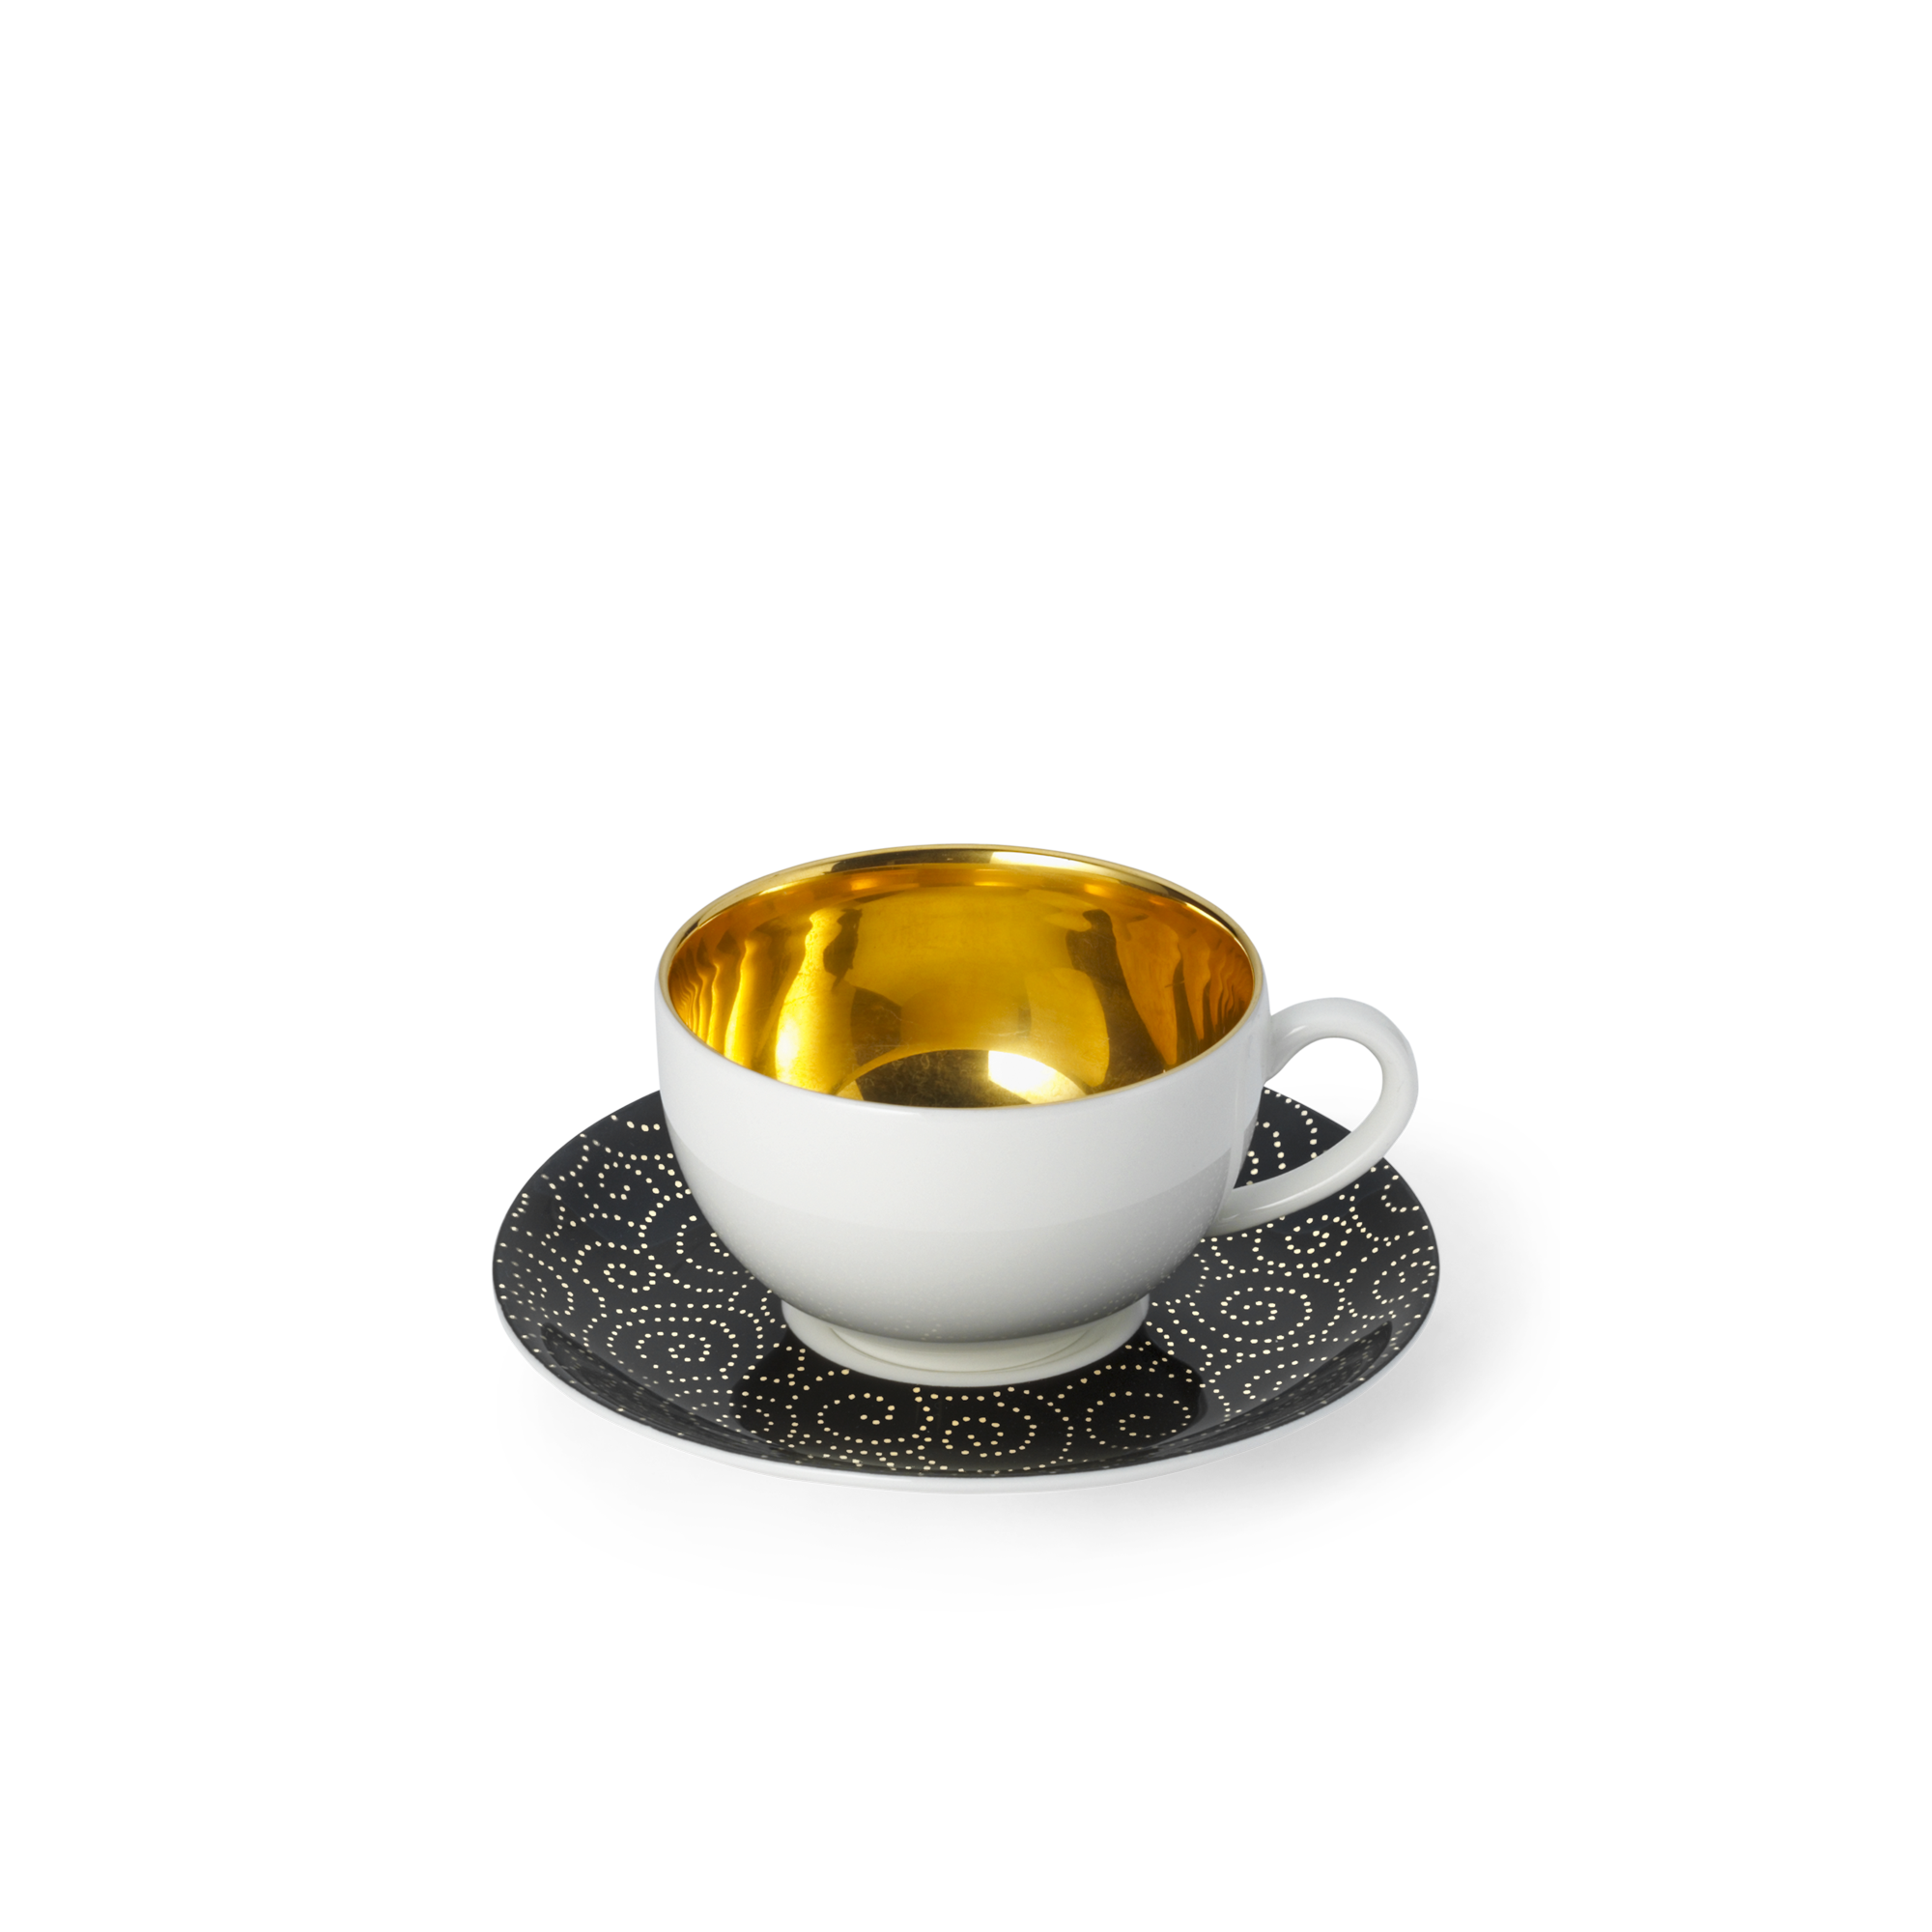 Ornament gold/black espresso set